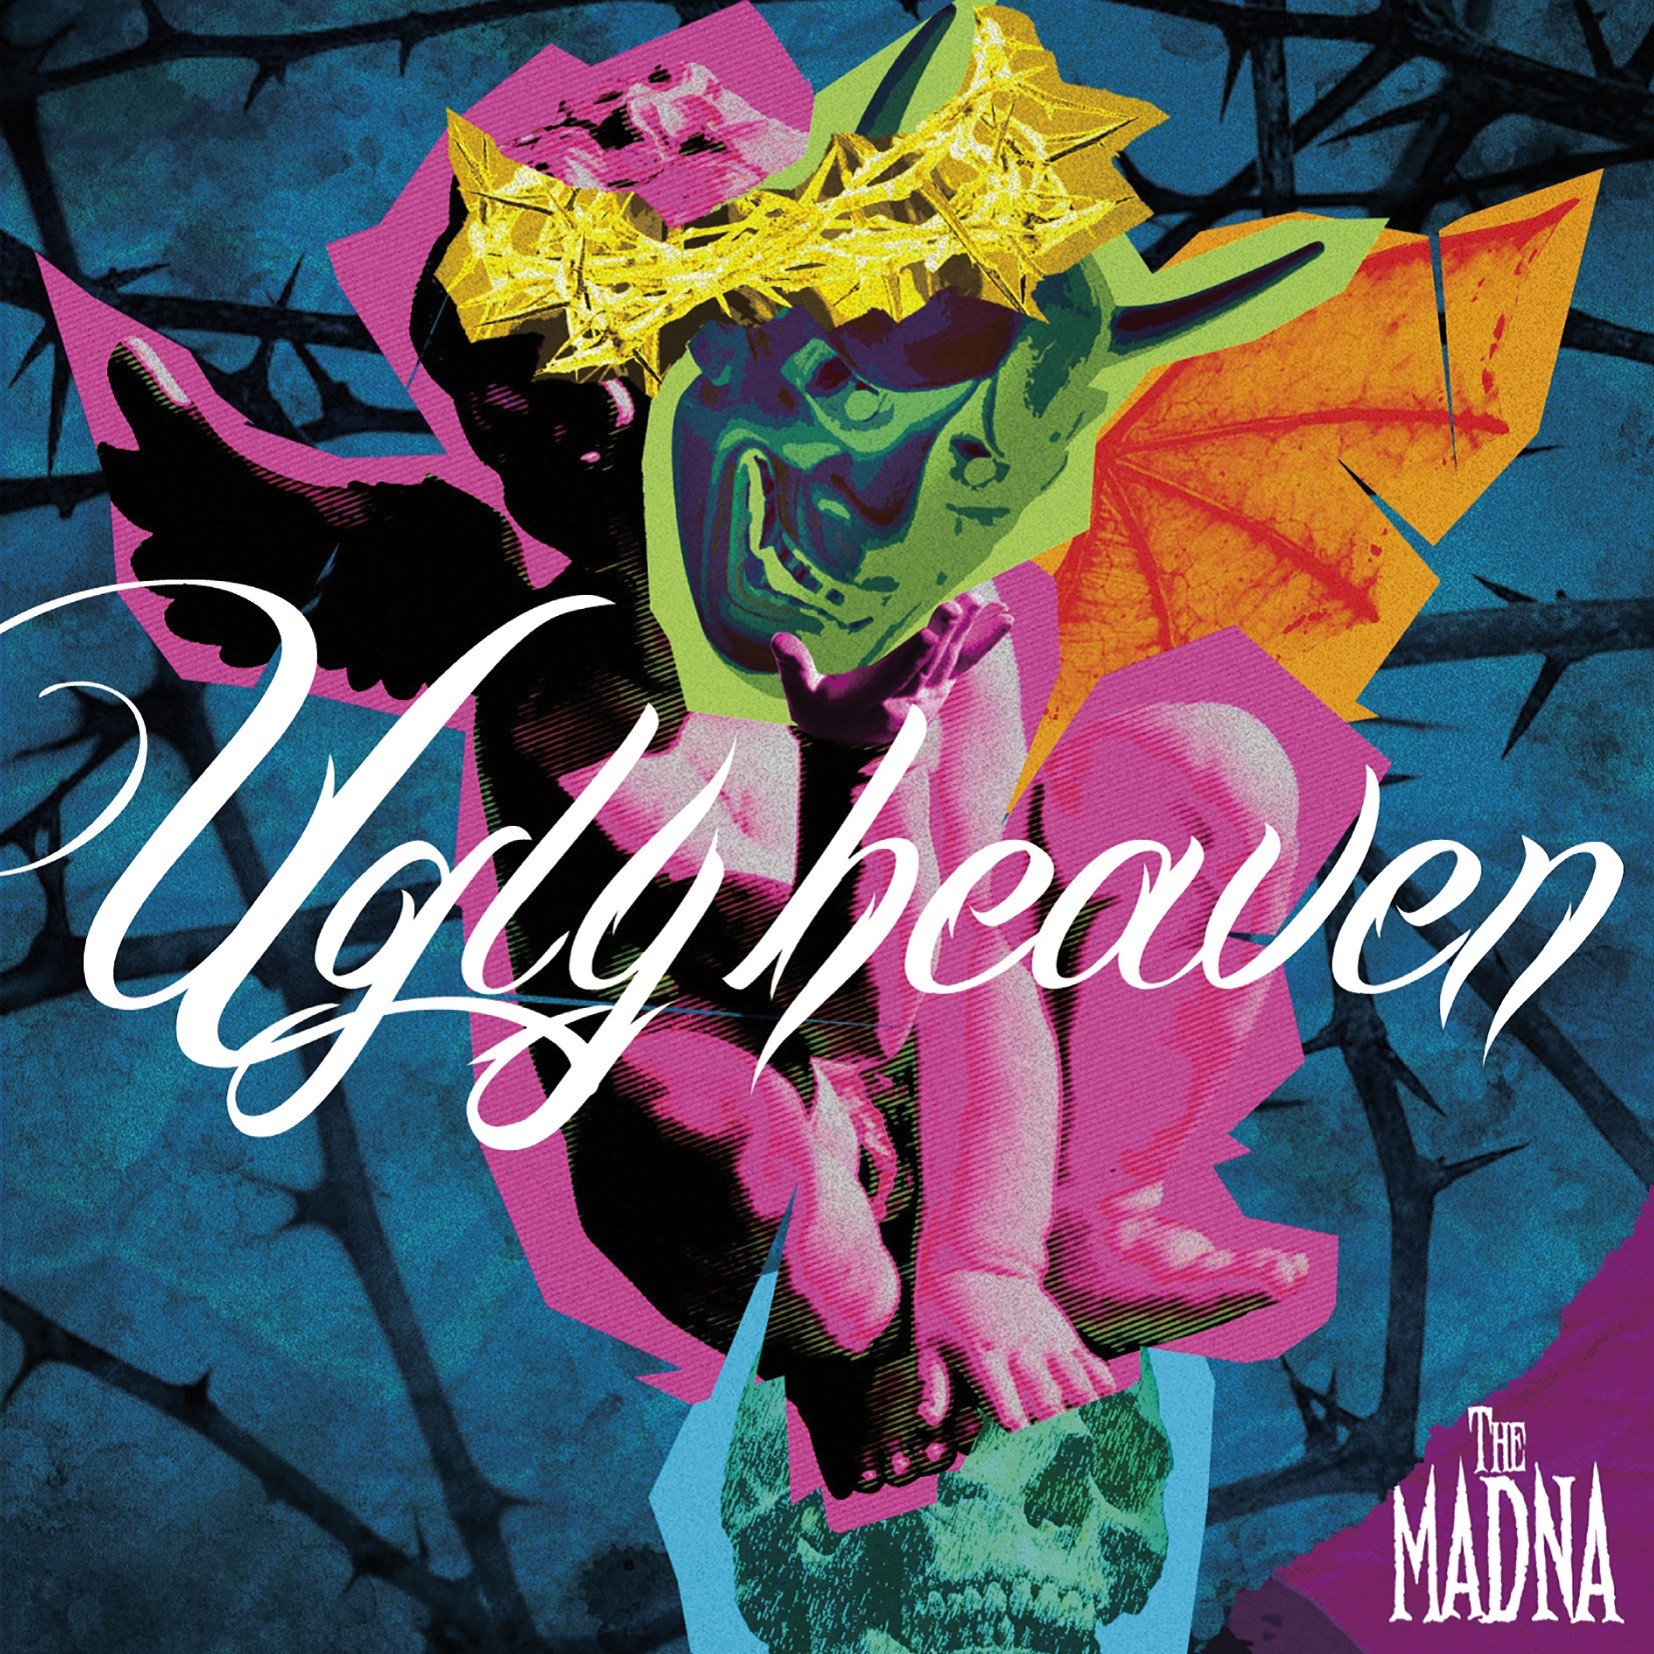 THE MADNA – Ugly heaven [FLAC / WEB] [2022.03.09]